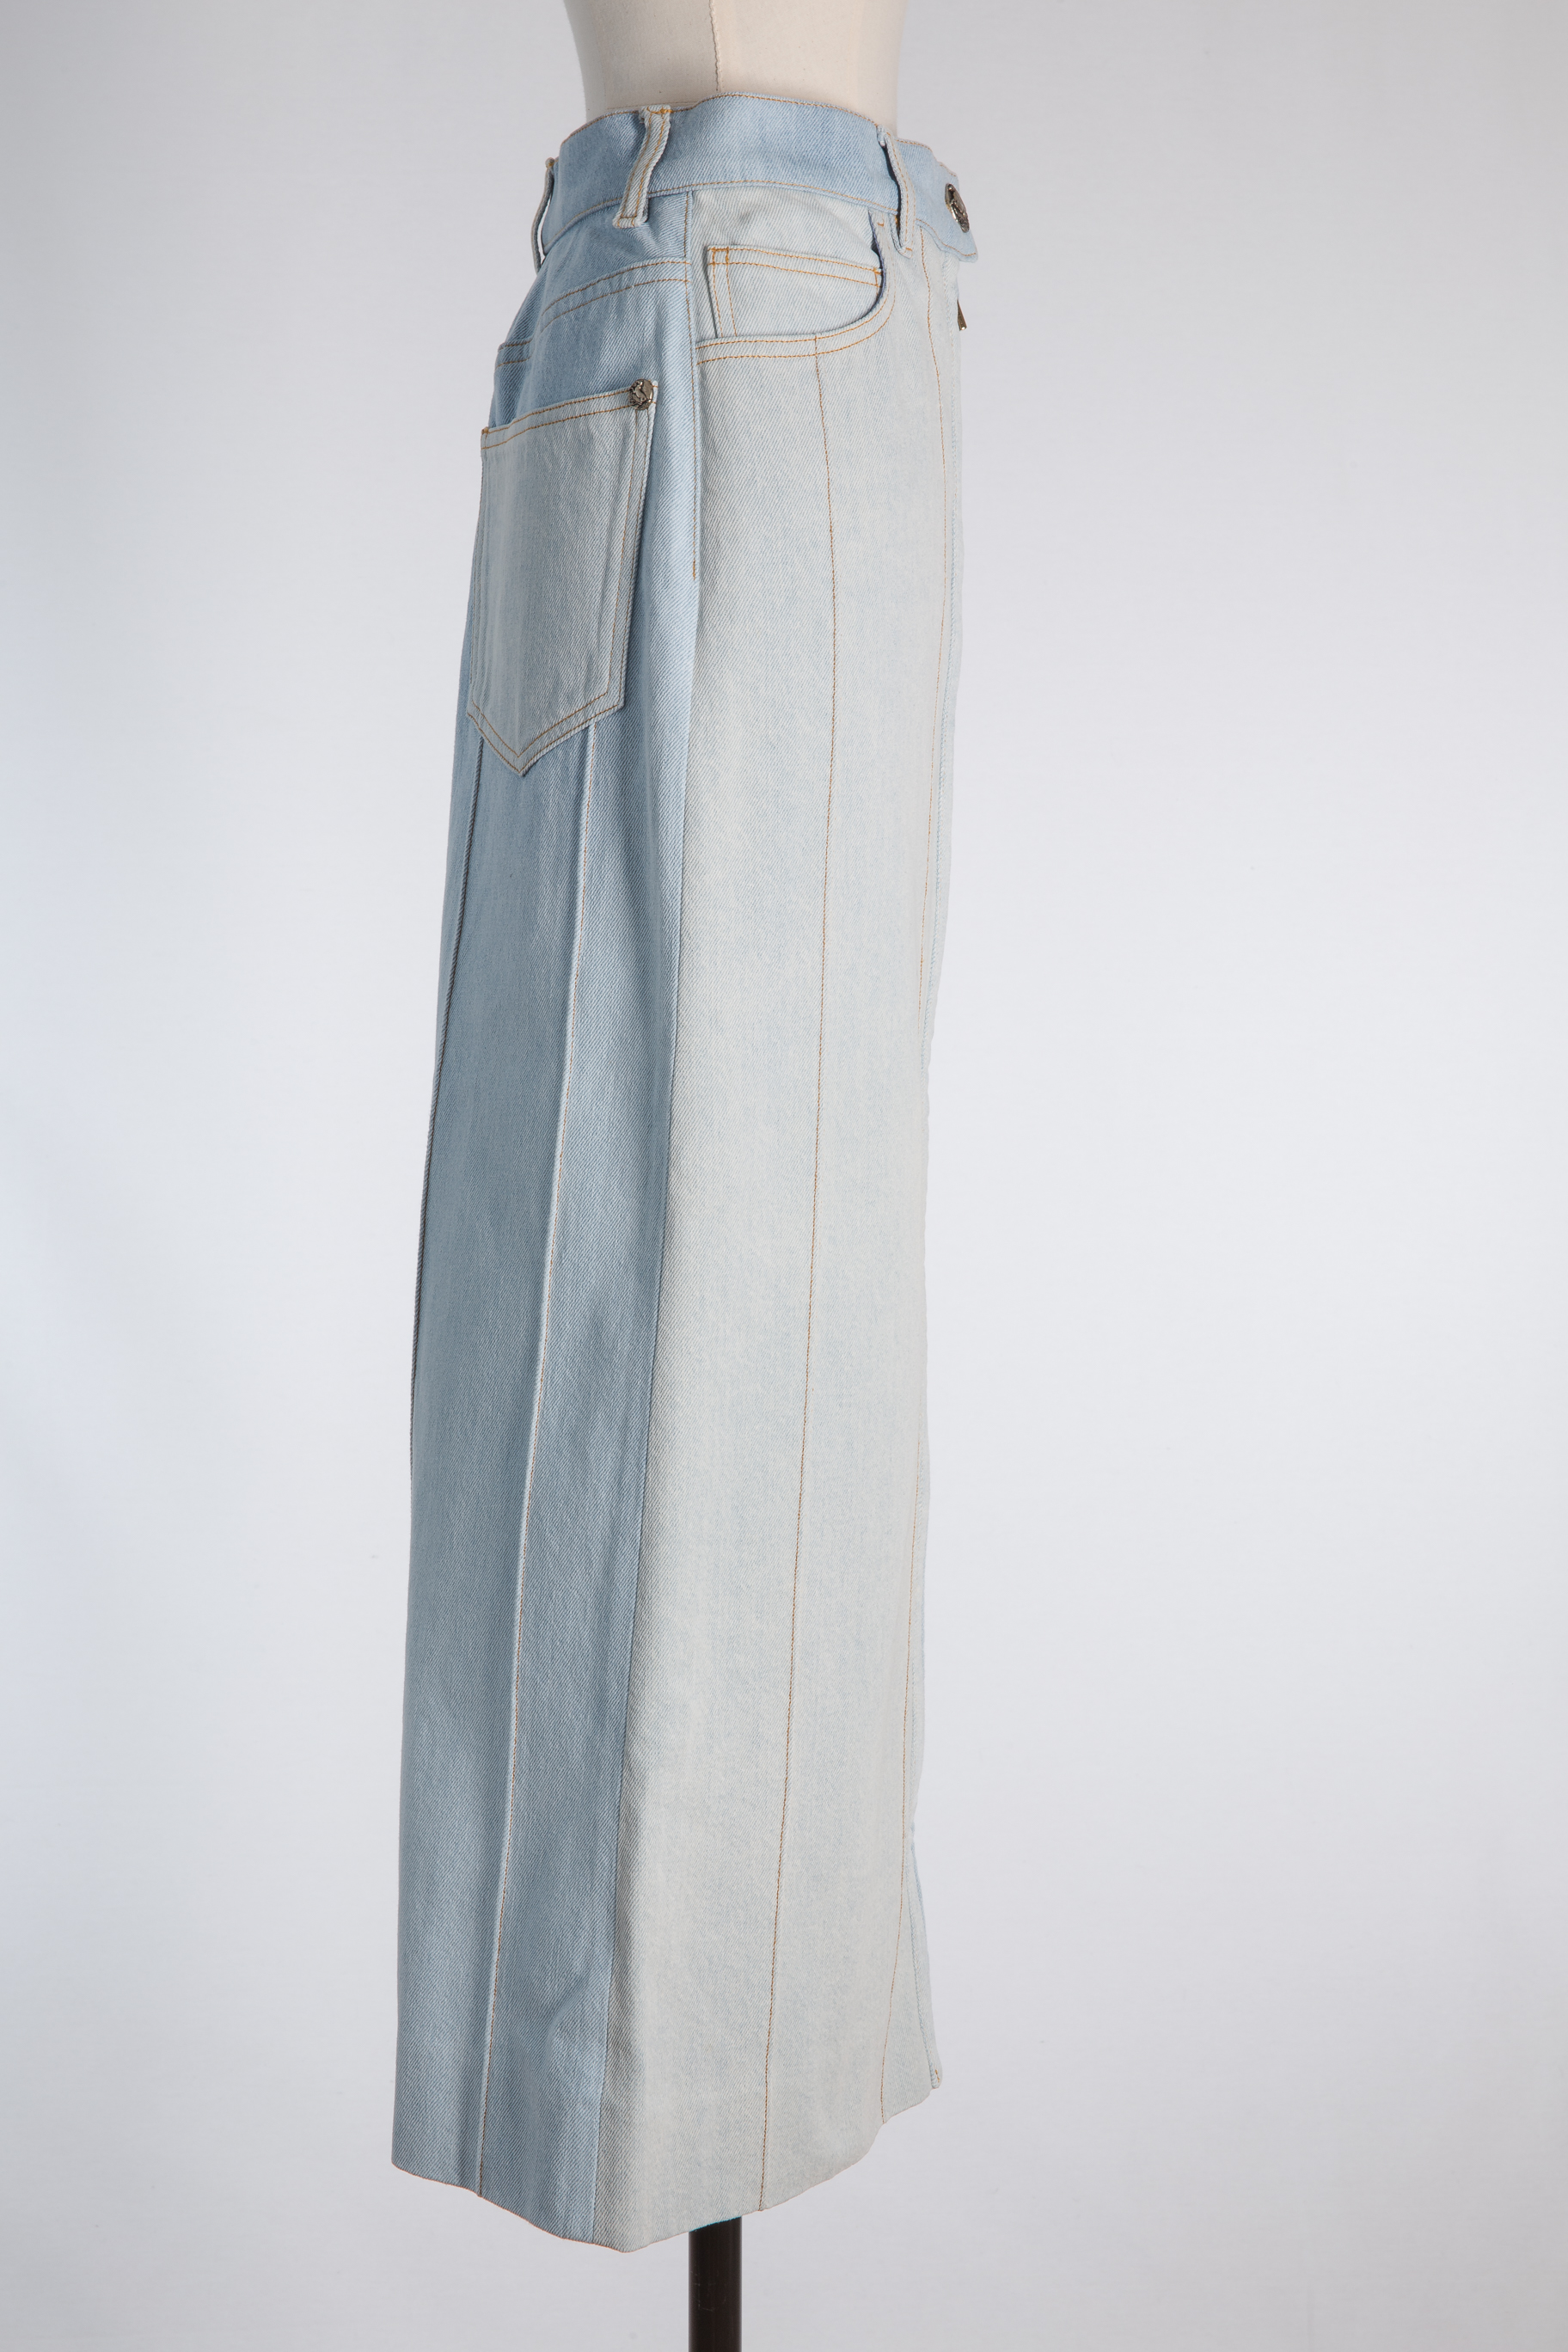 vintage chanel jeans 36